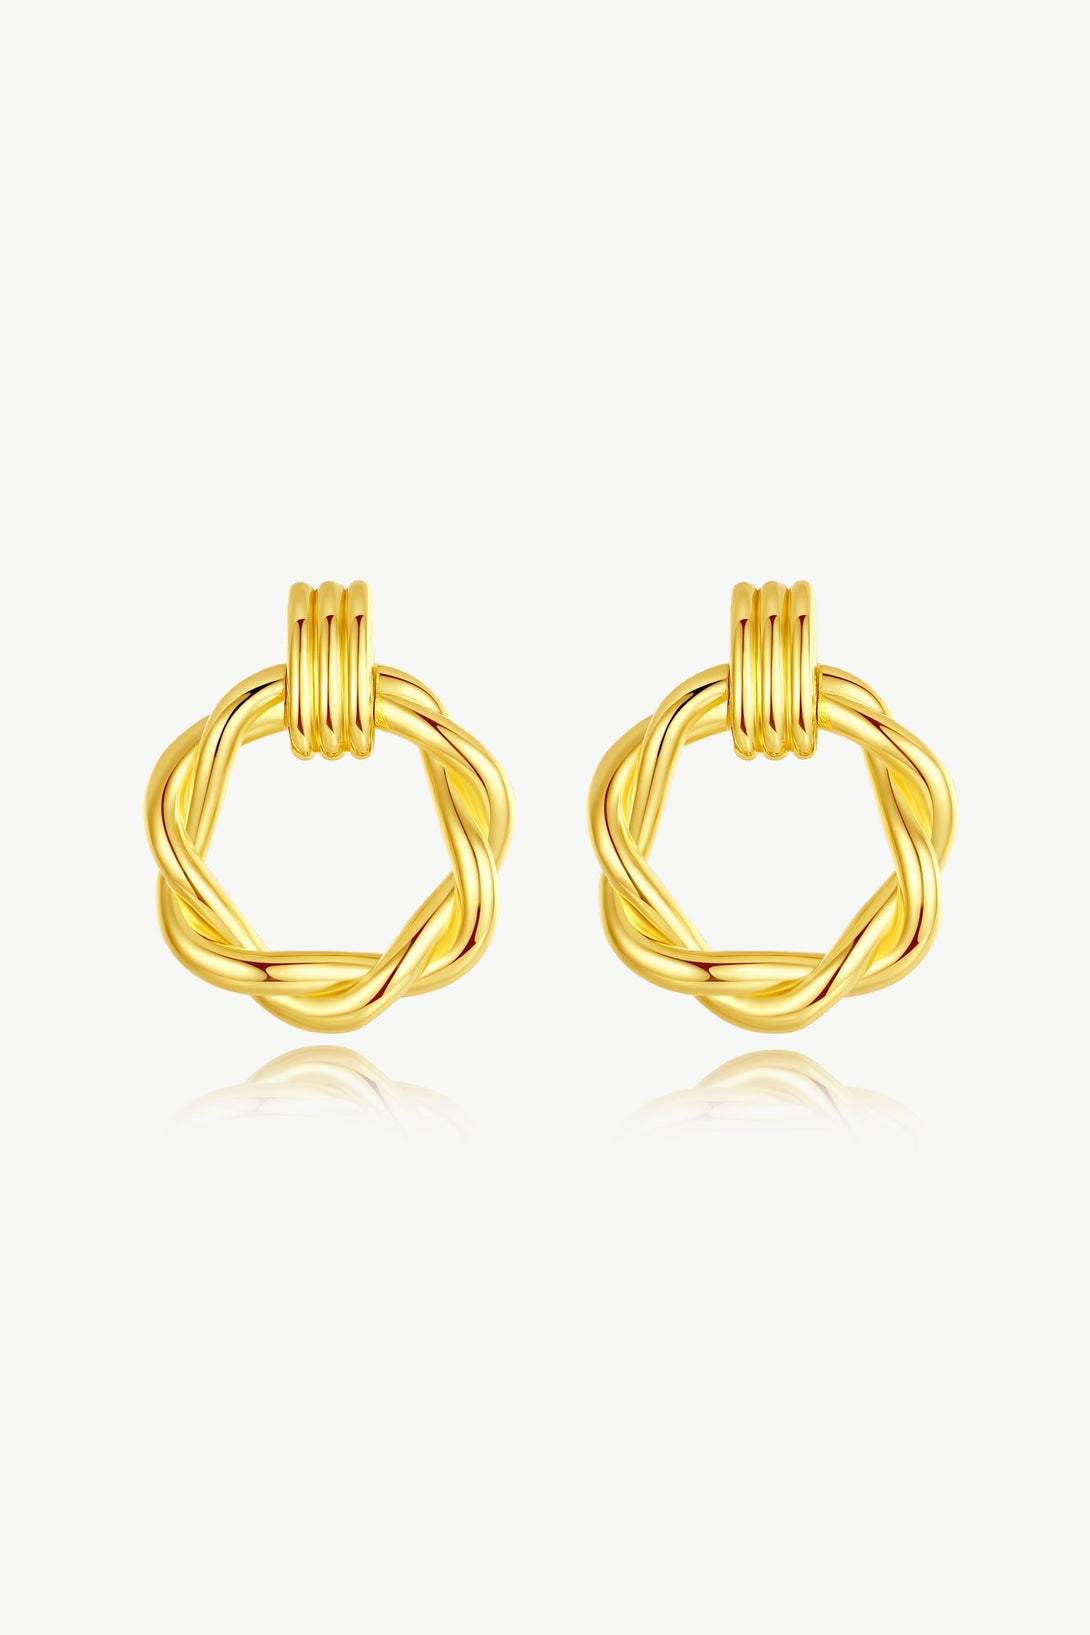 Eléa Gold Twisted Hoop Earrings - Classicharms